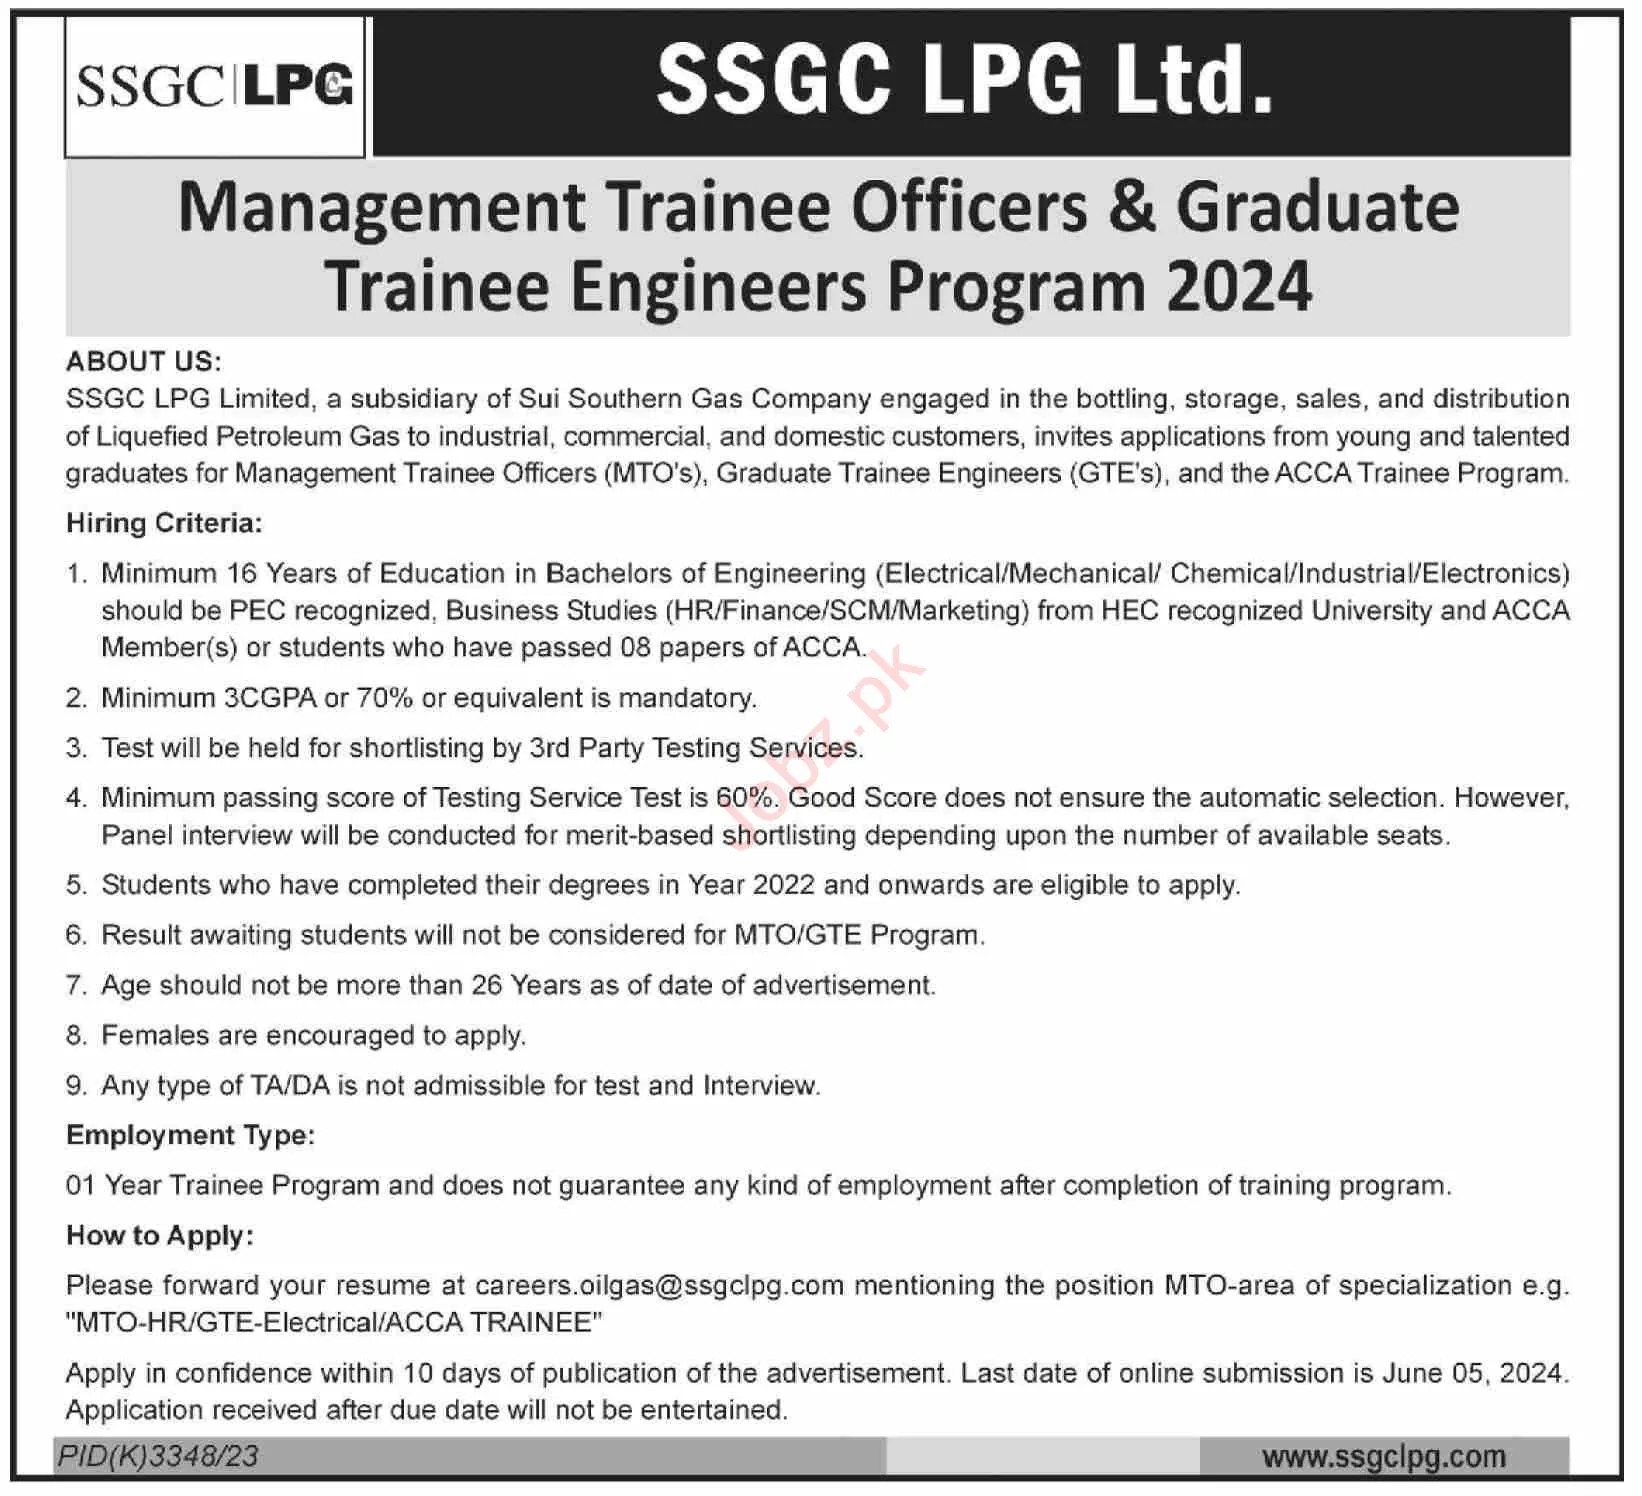 SSGC LPG Ltd. Management Trainee Officers & Graduate Trainee Engineers Program 2024